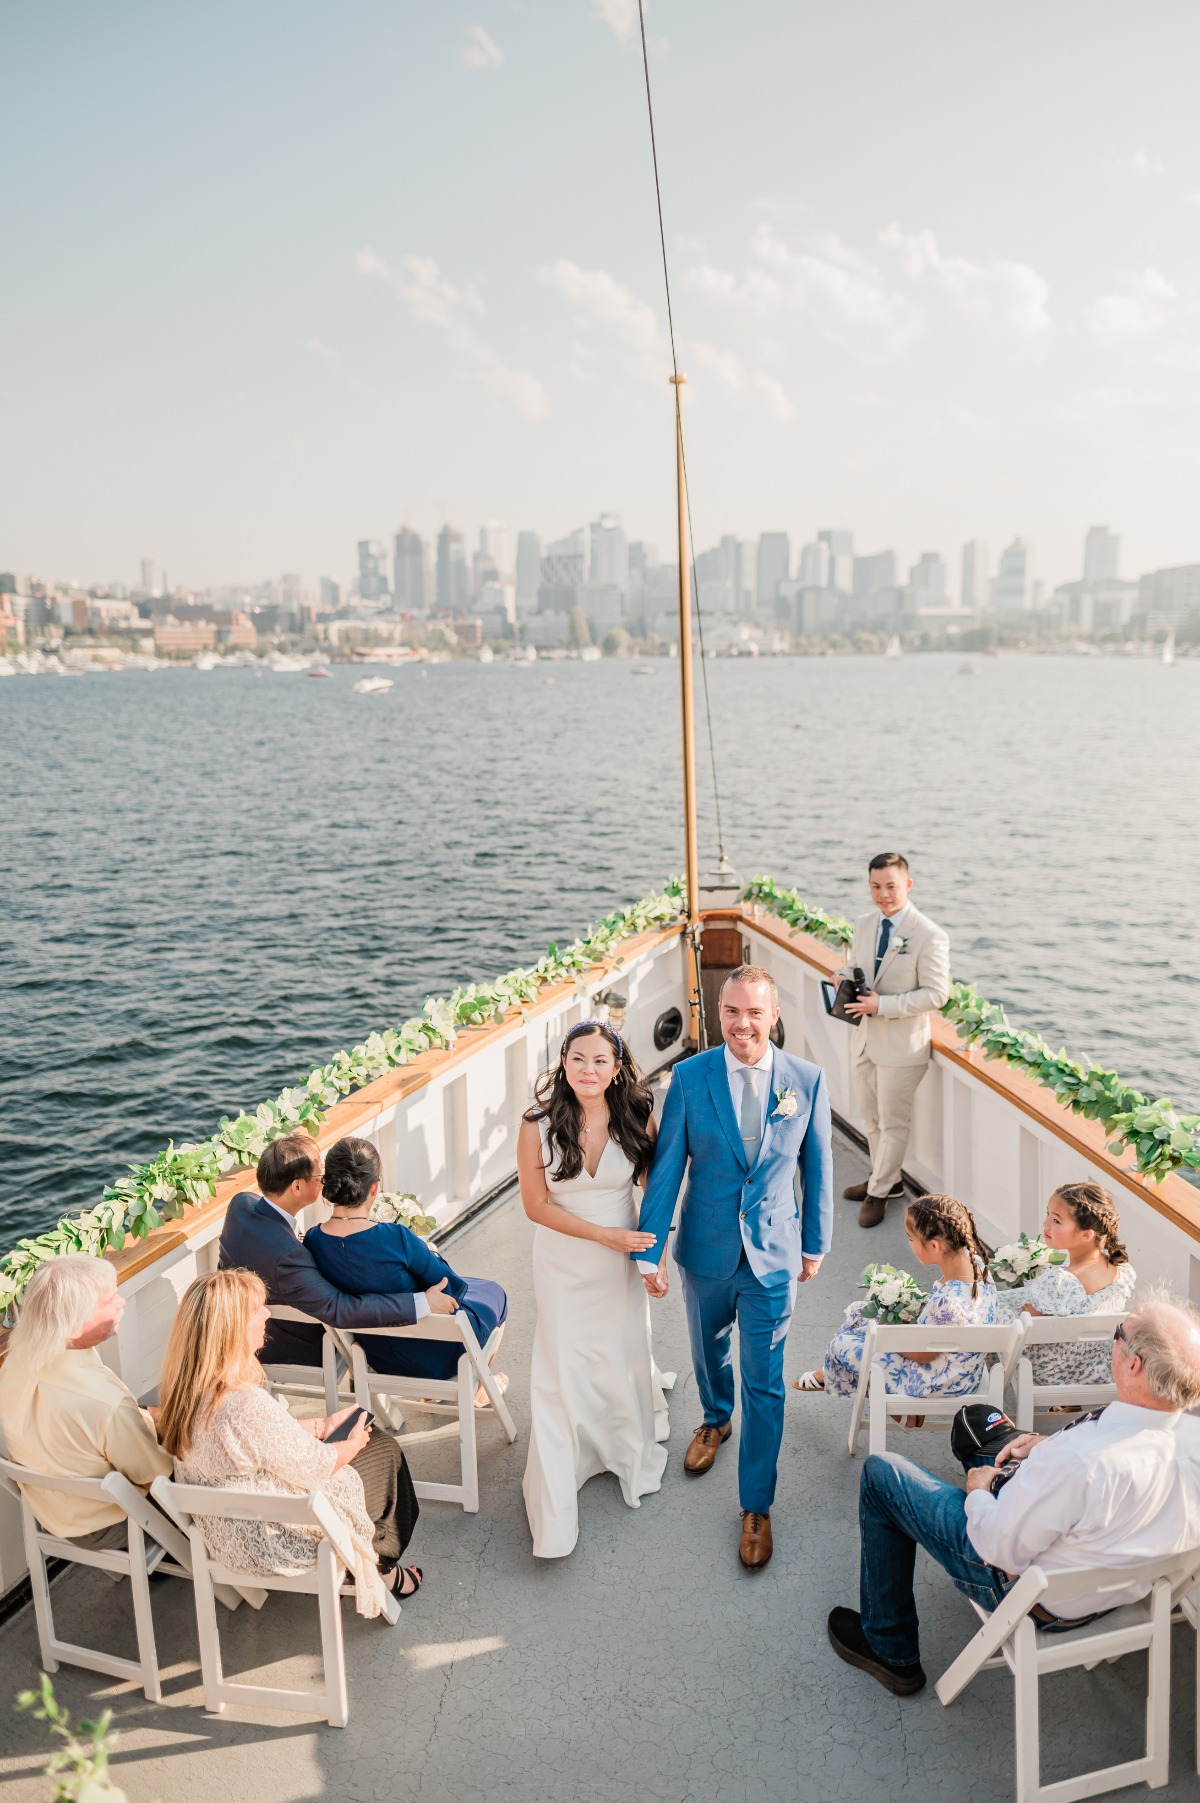 Newlyweds at boat wedding 